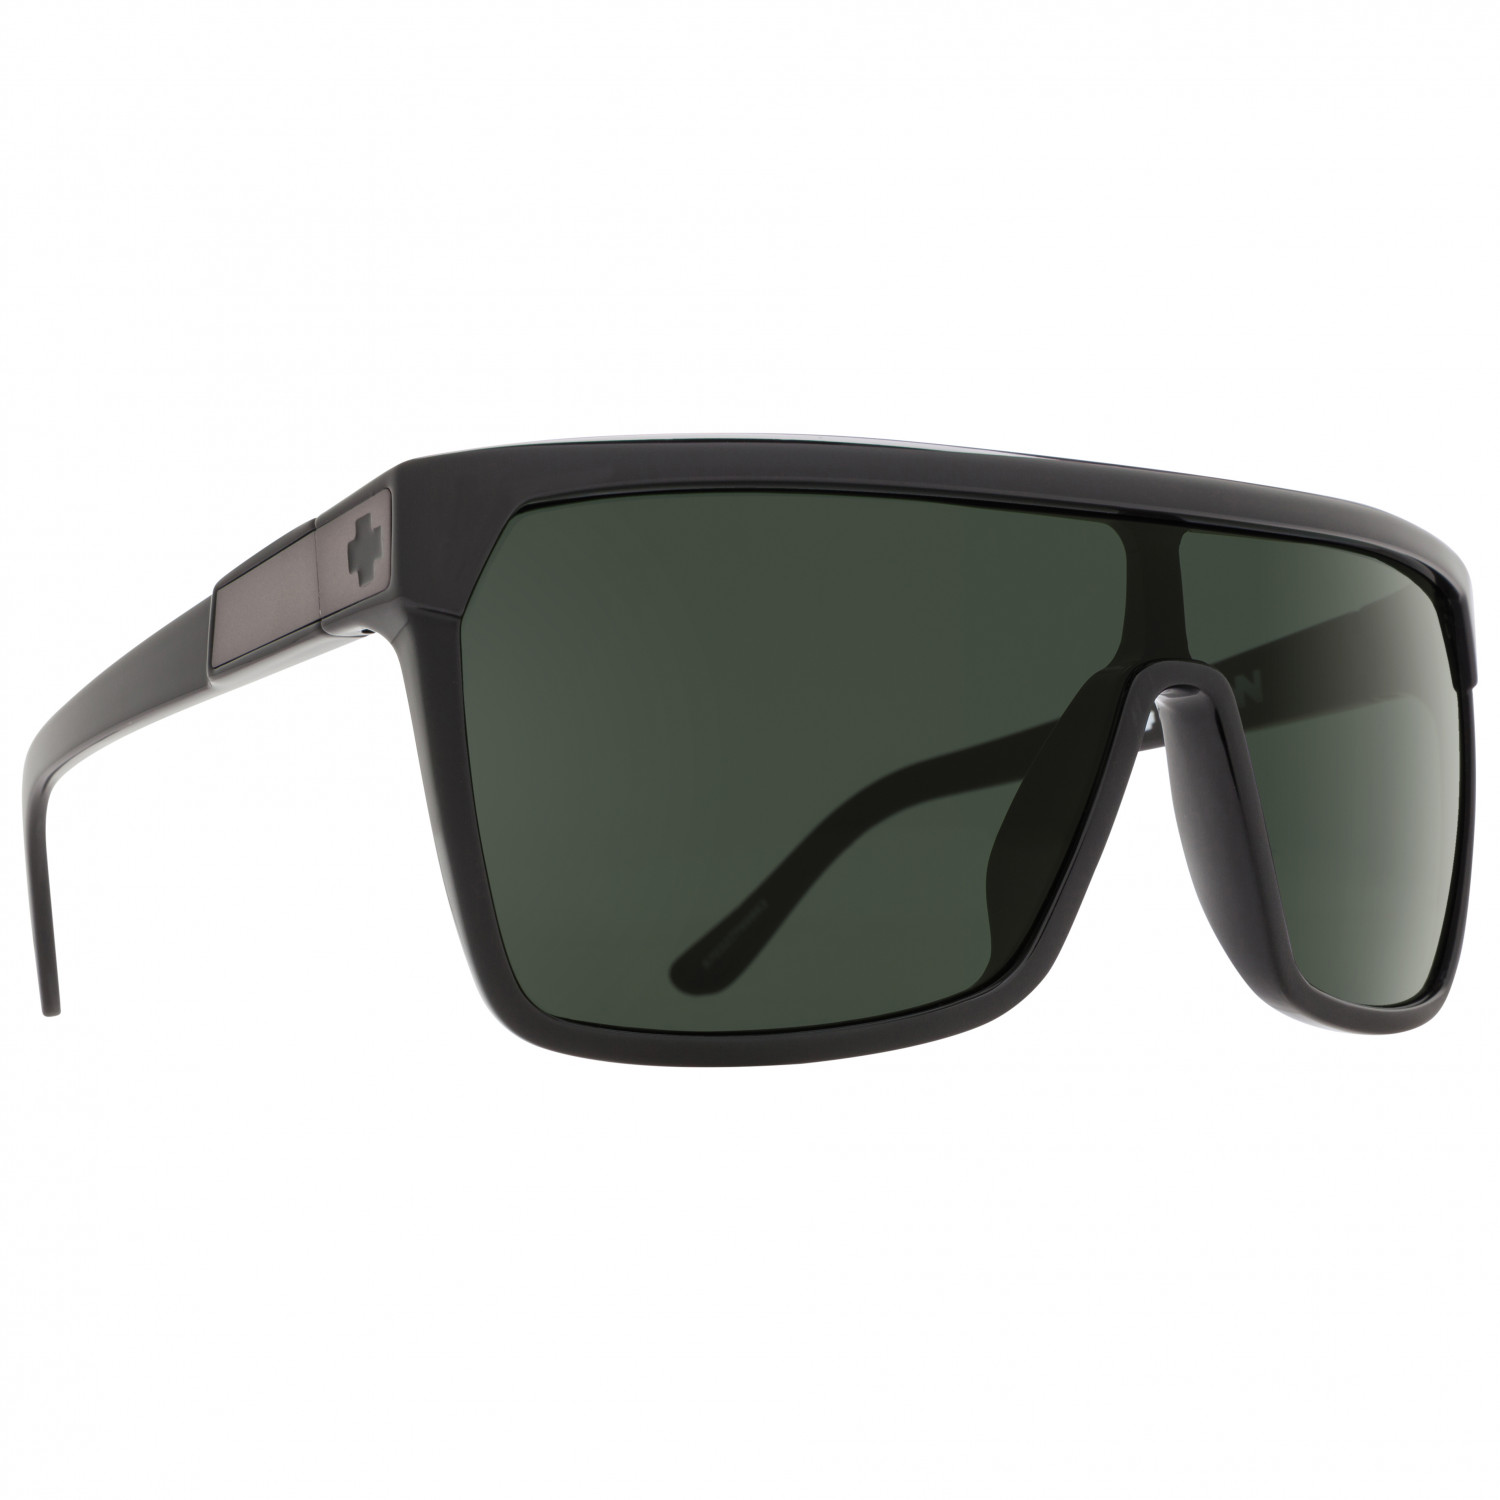 Солнцезащитные очки Spy+ Flynn S3 (VLT 15%), цвет Black/Matte Black солнцезащитные очки flynn spy optic цвет matte ebony ivory hd plus gray green